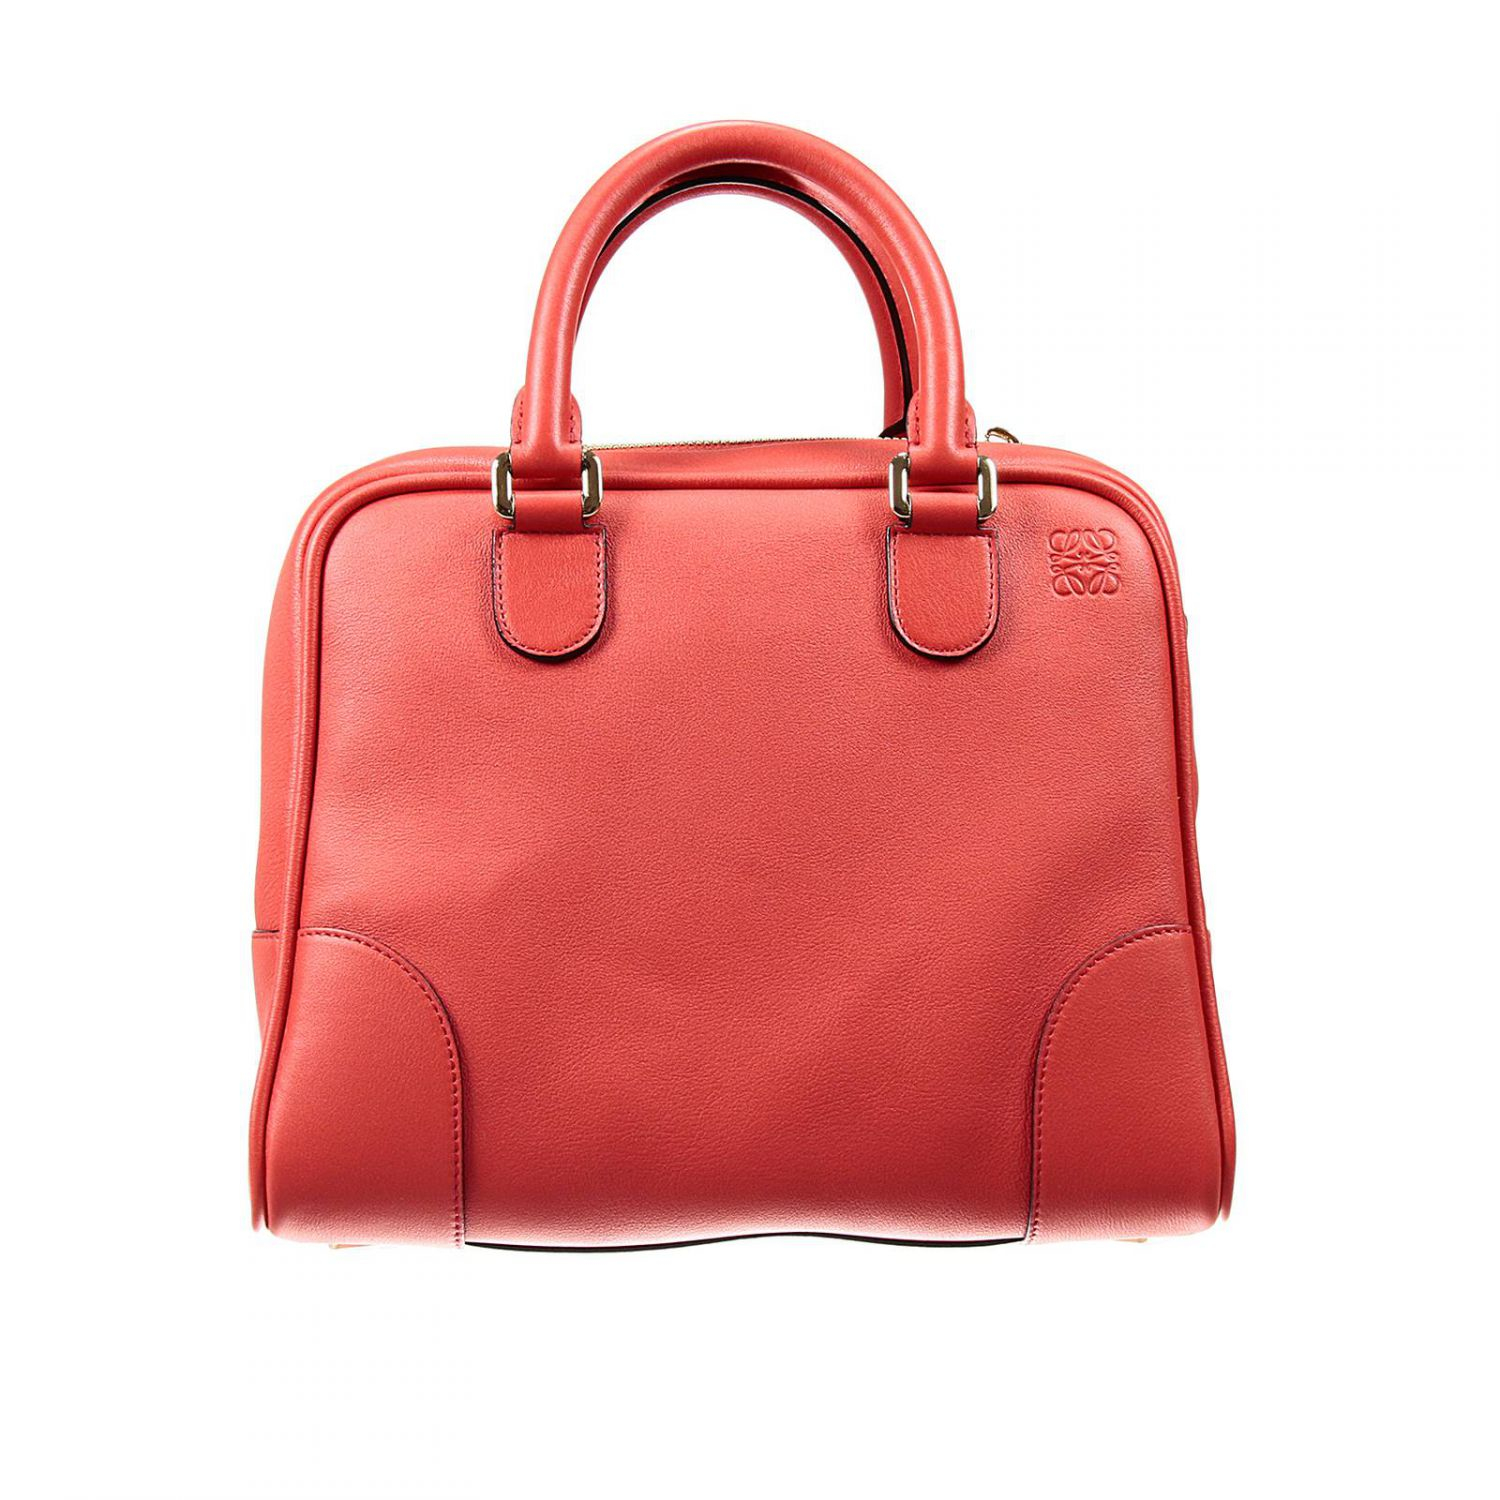 Lyst - Loewe Handbag Amazona Medium Leather in Red